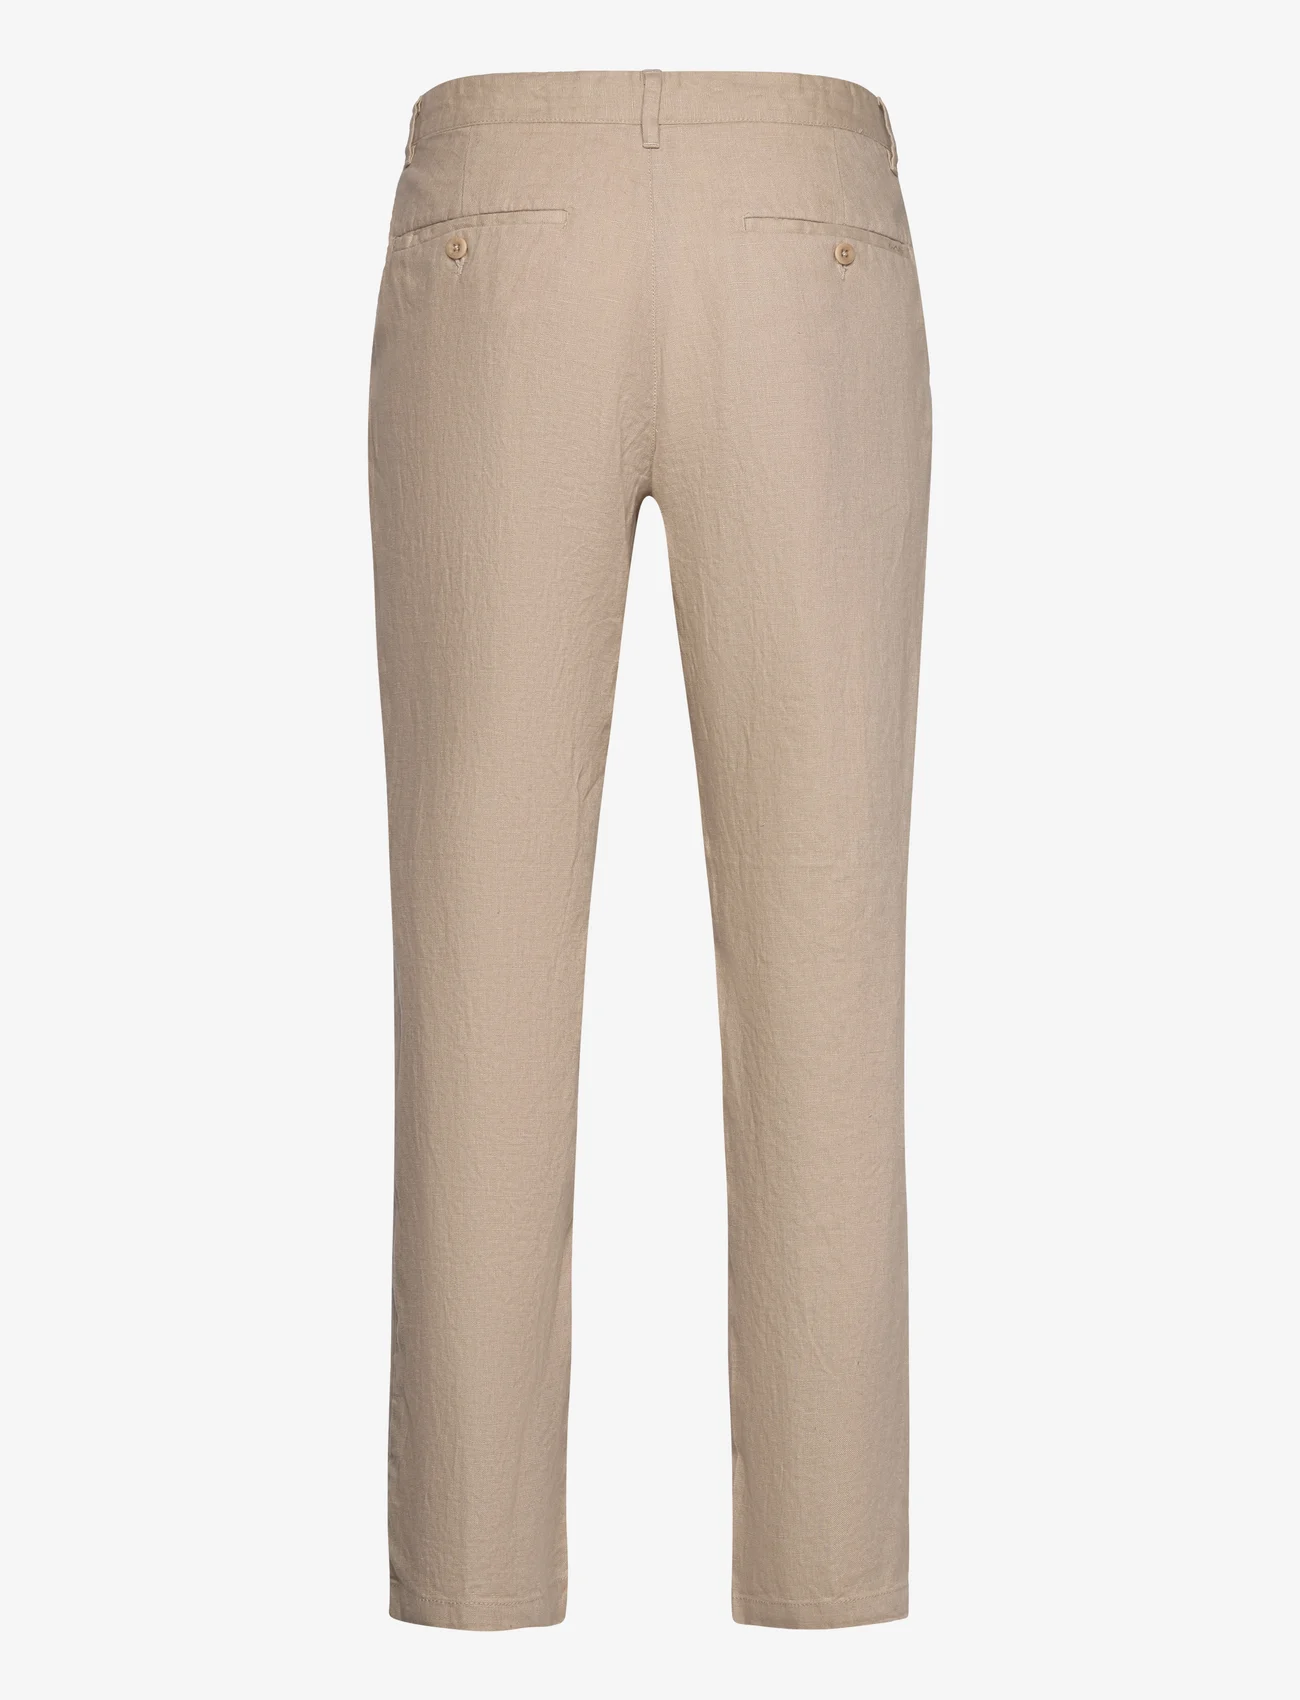 GANT - RELAXED LINEN DS PANTS - linen trousers - dry sand - 1